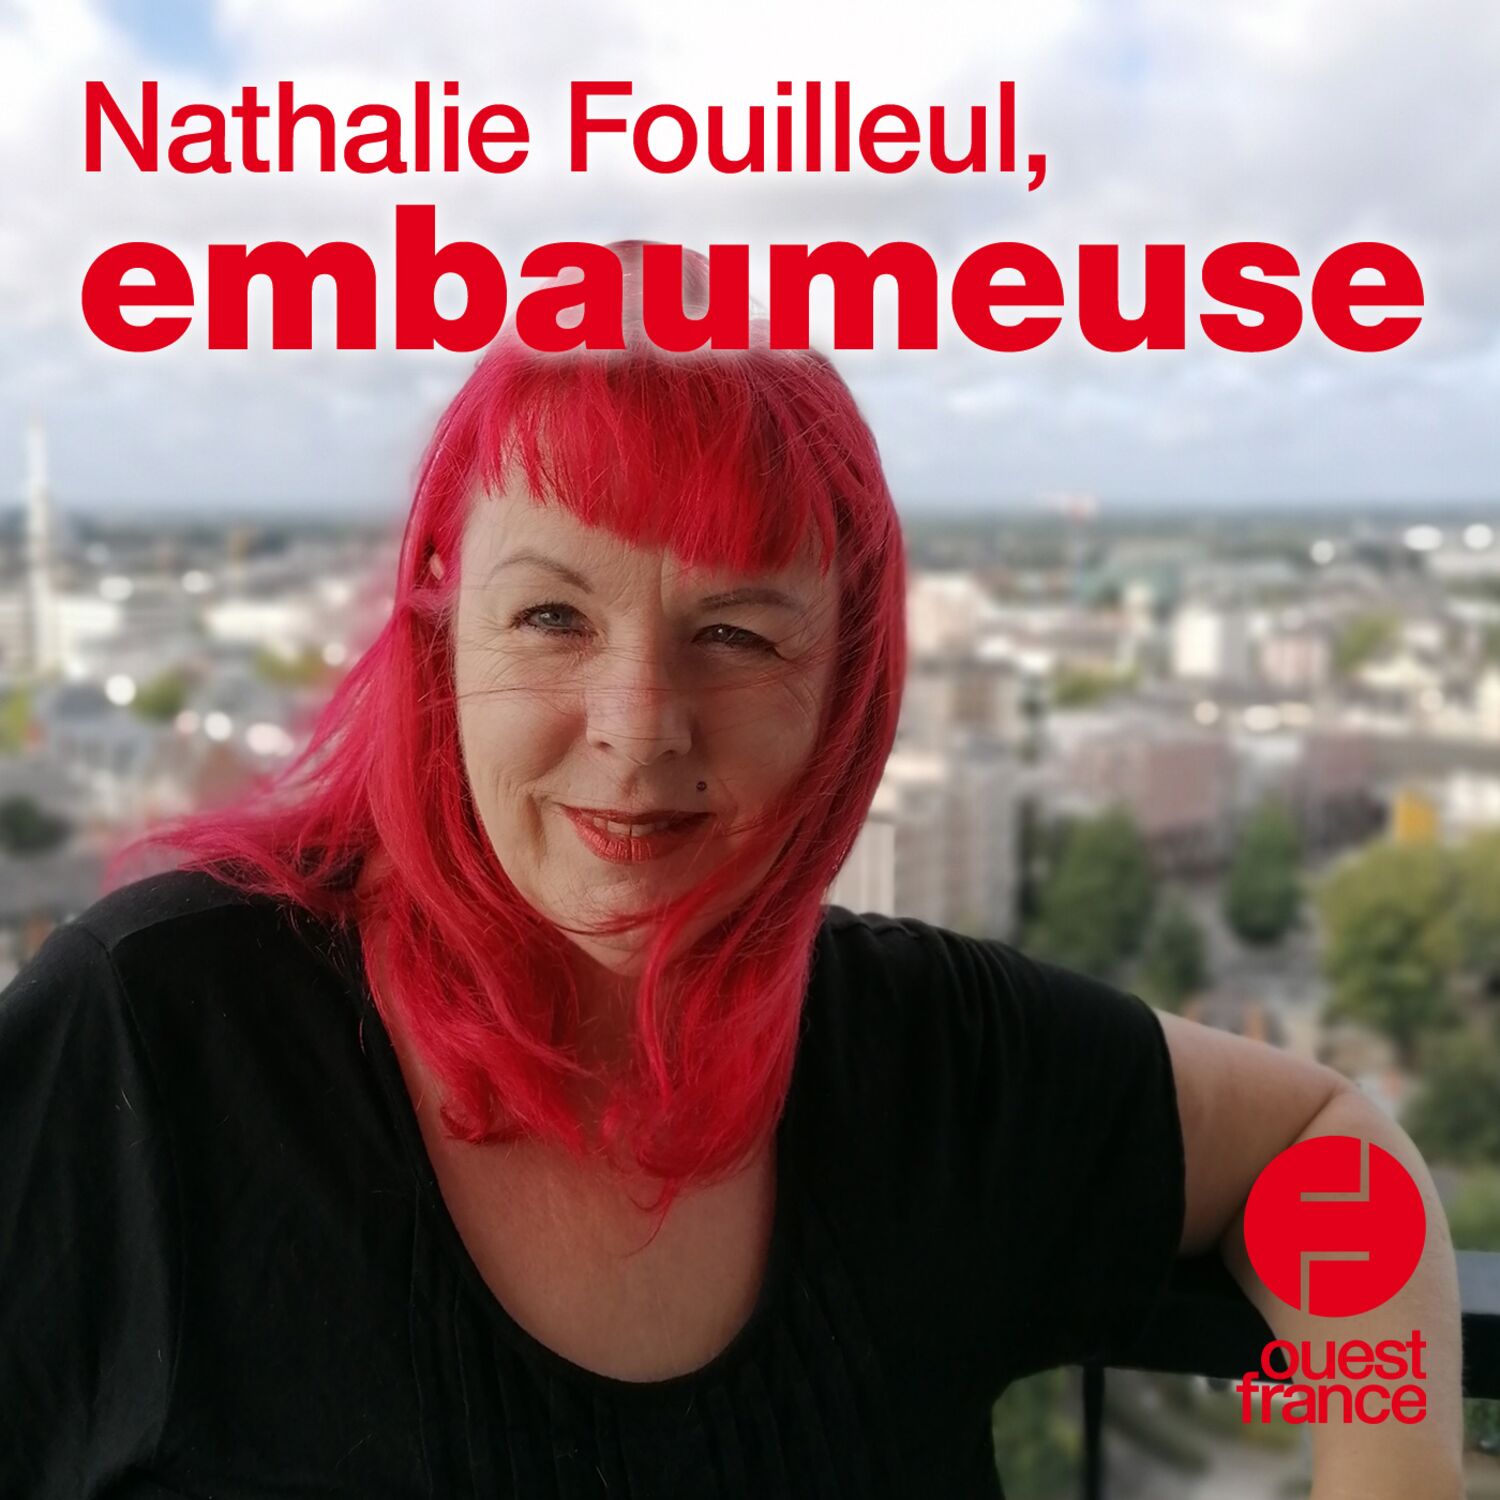 Nathalie Fouilleul, embaumeuse